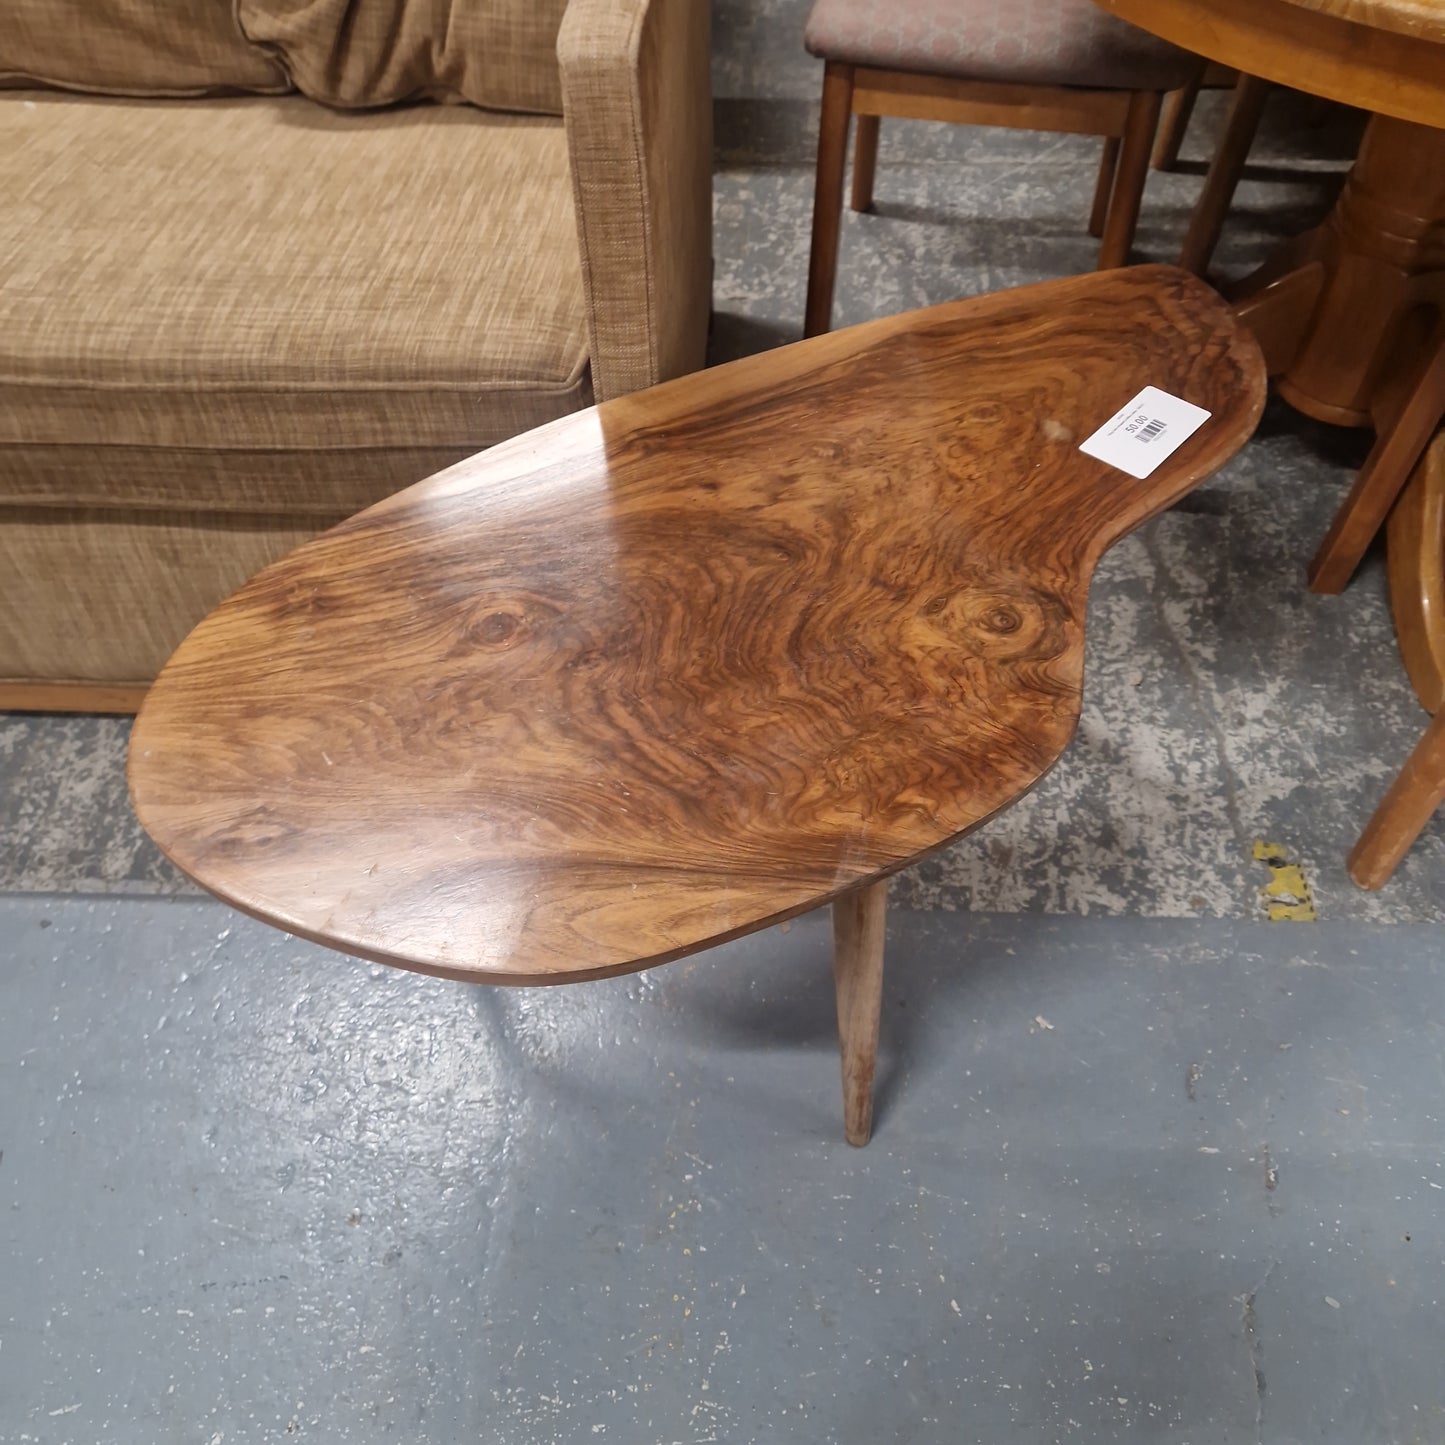 Bog oak shaped coffee table